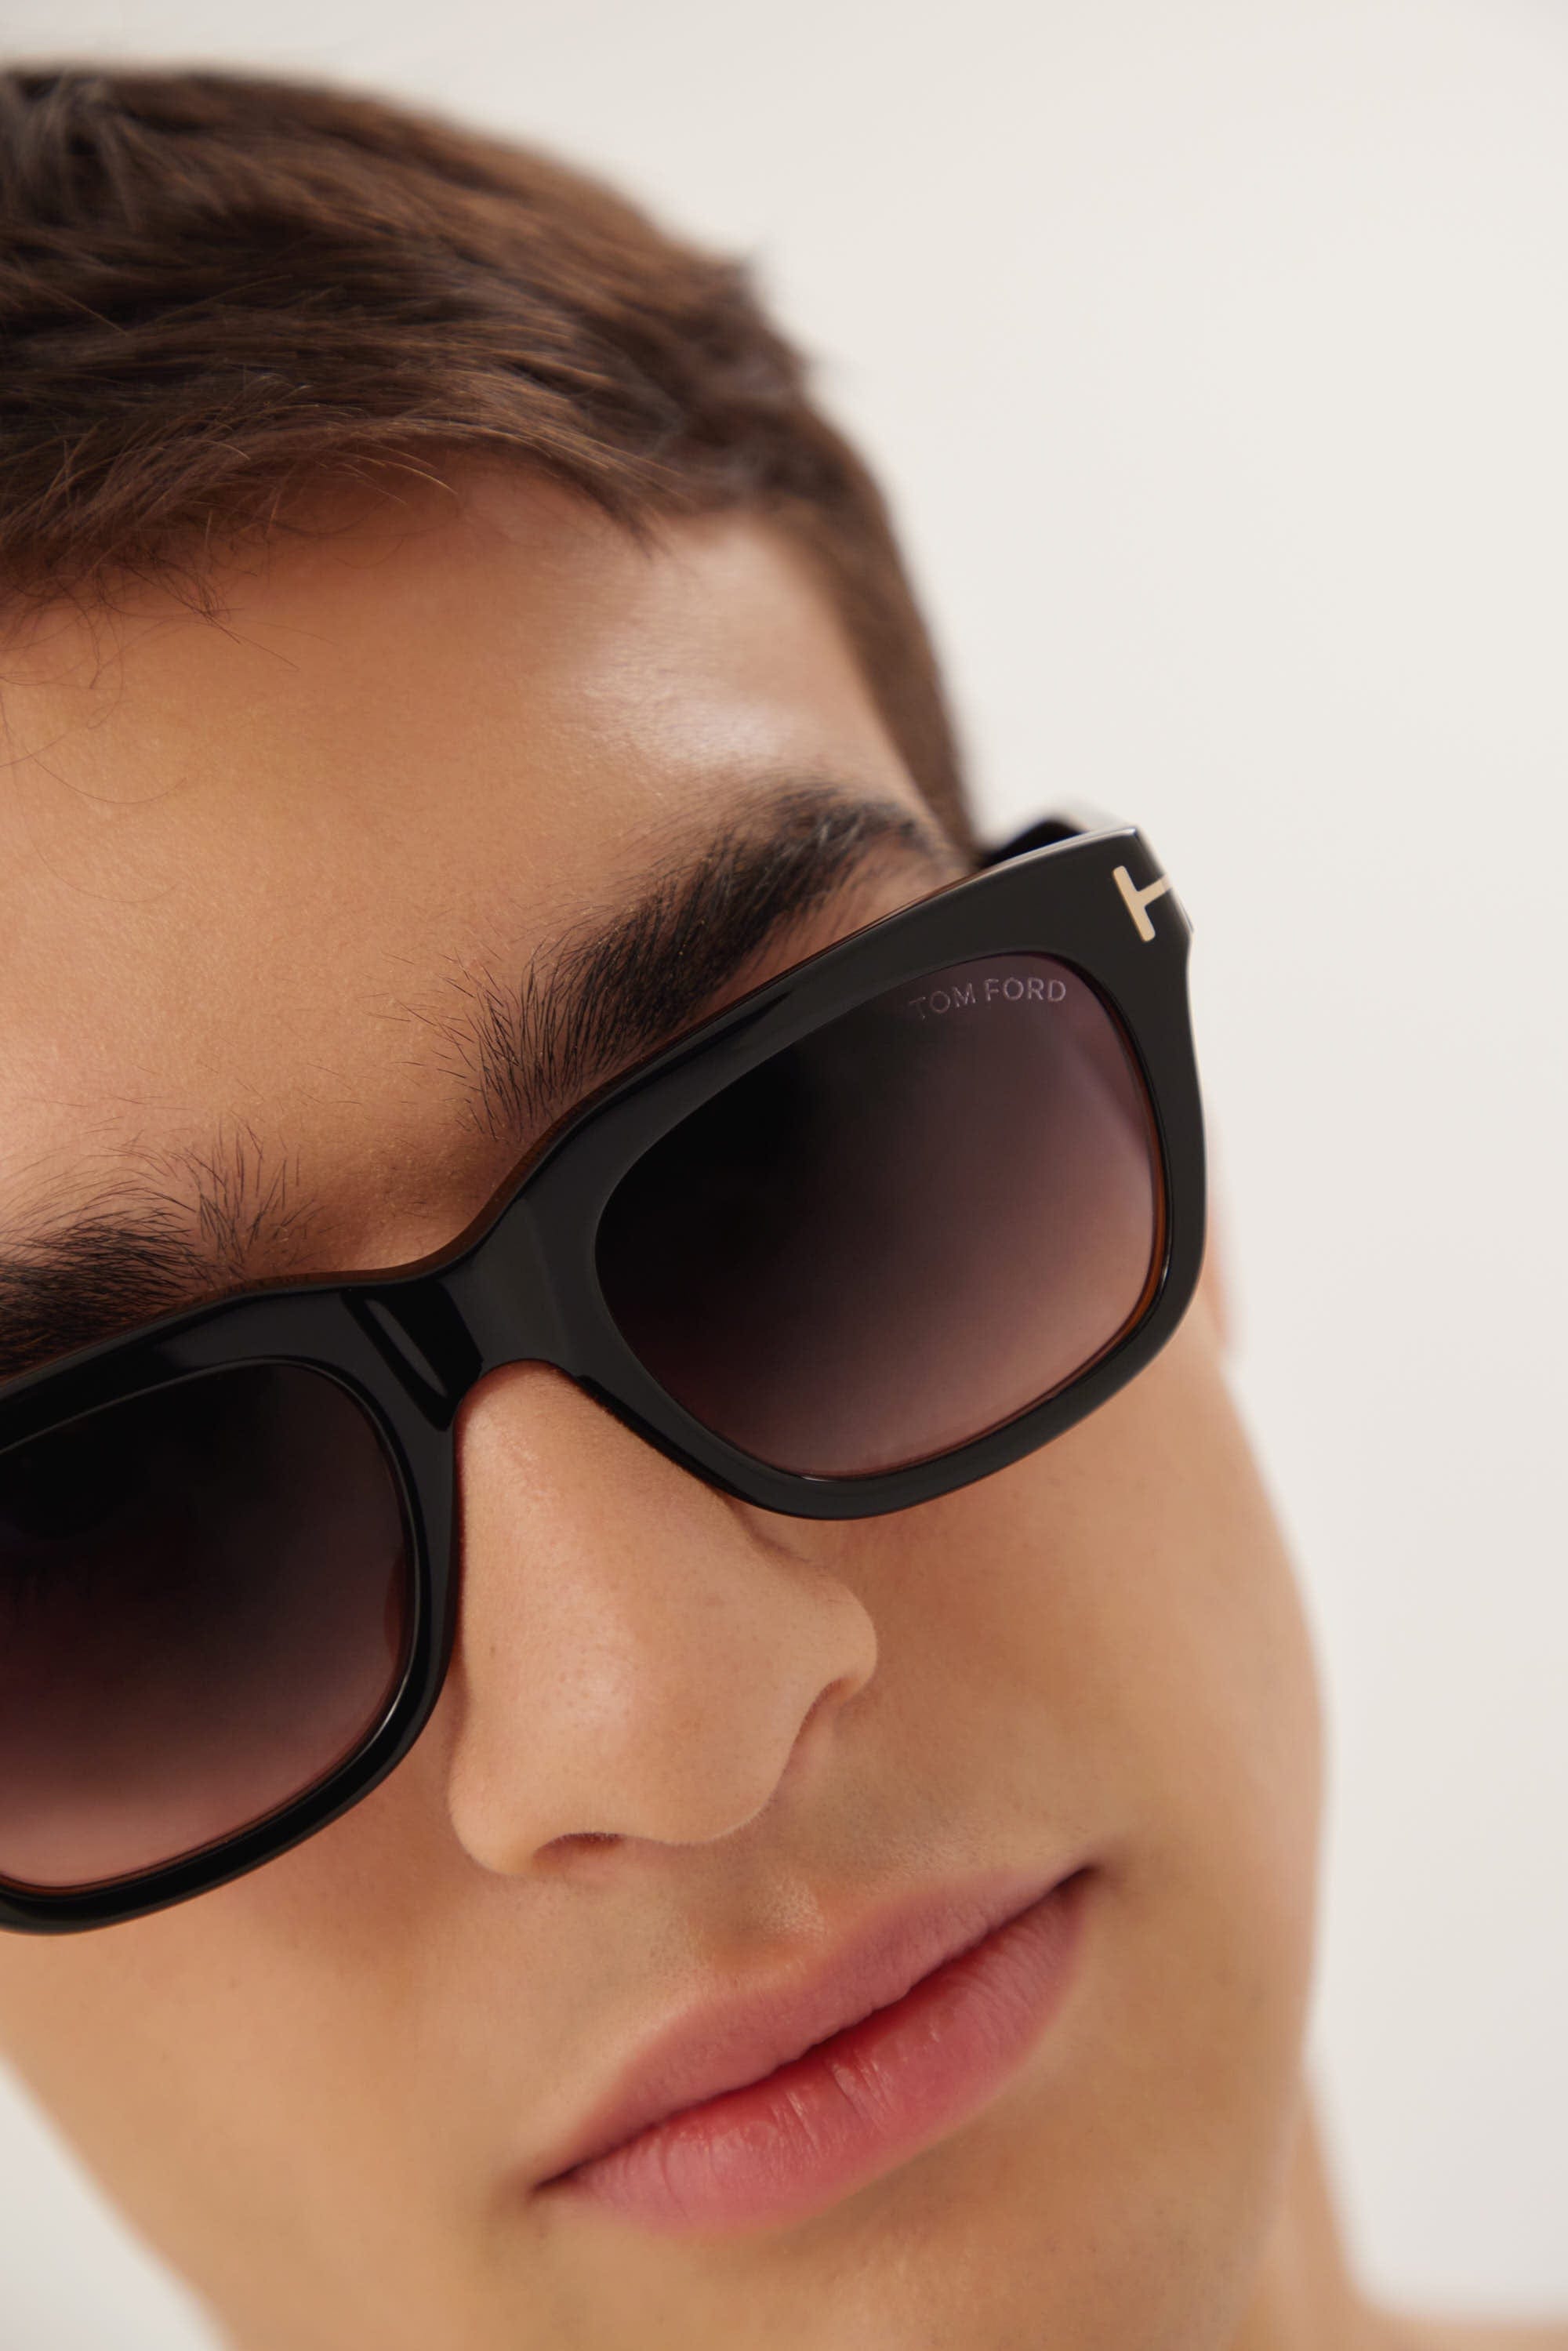 Tom Ford classic black sunglasses - Eyewear Club